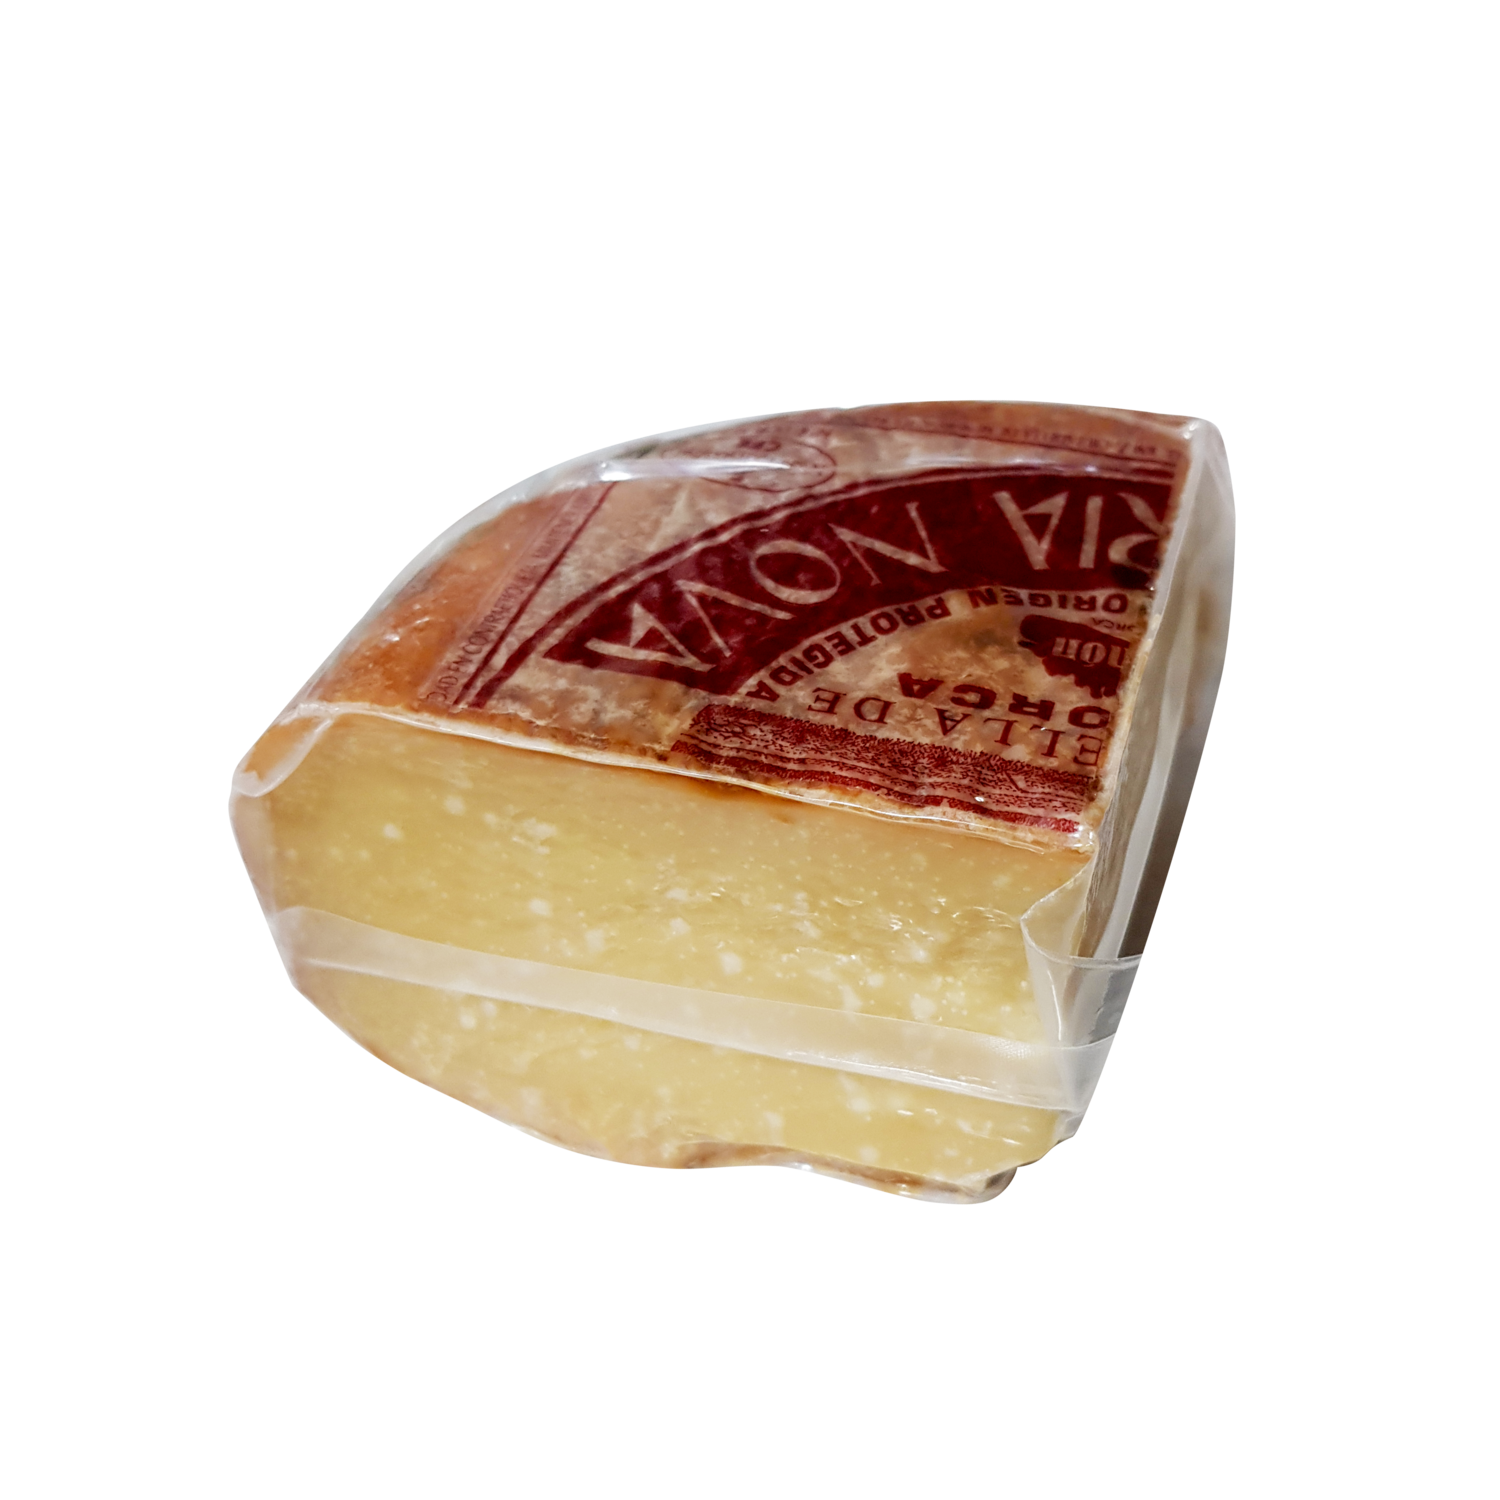 Cavalleria Nova Cured Mahon Wedge Cheese (Approx. 220g)